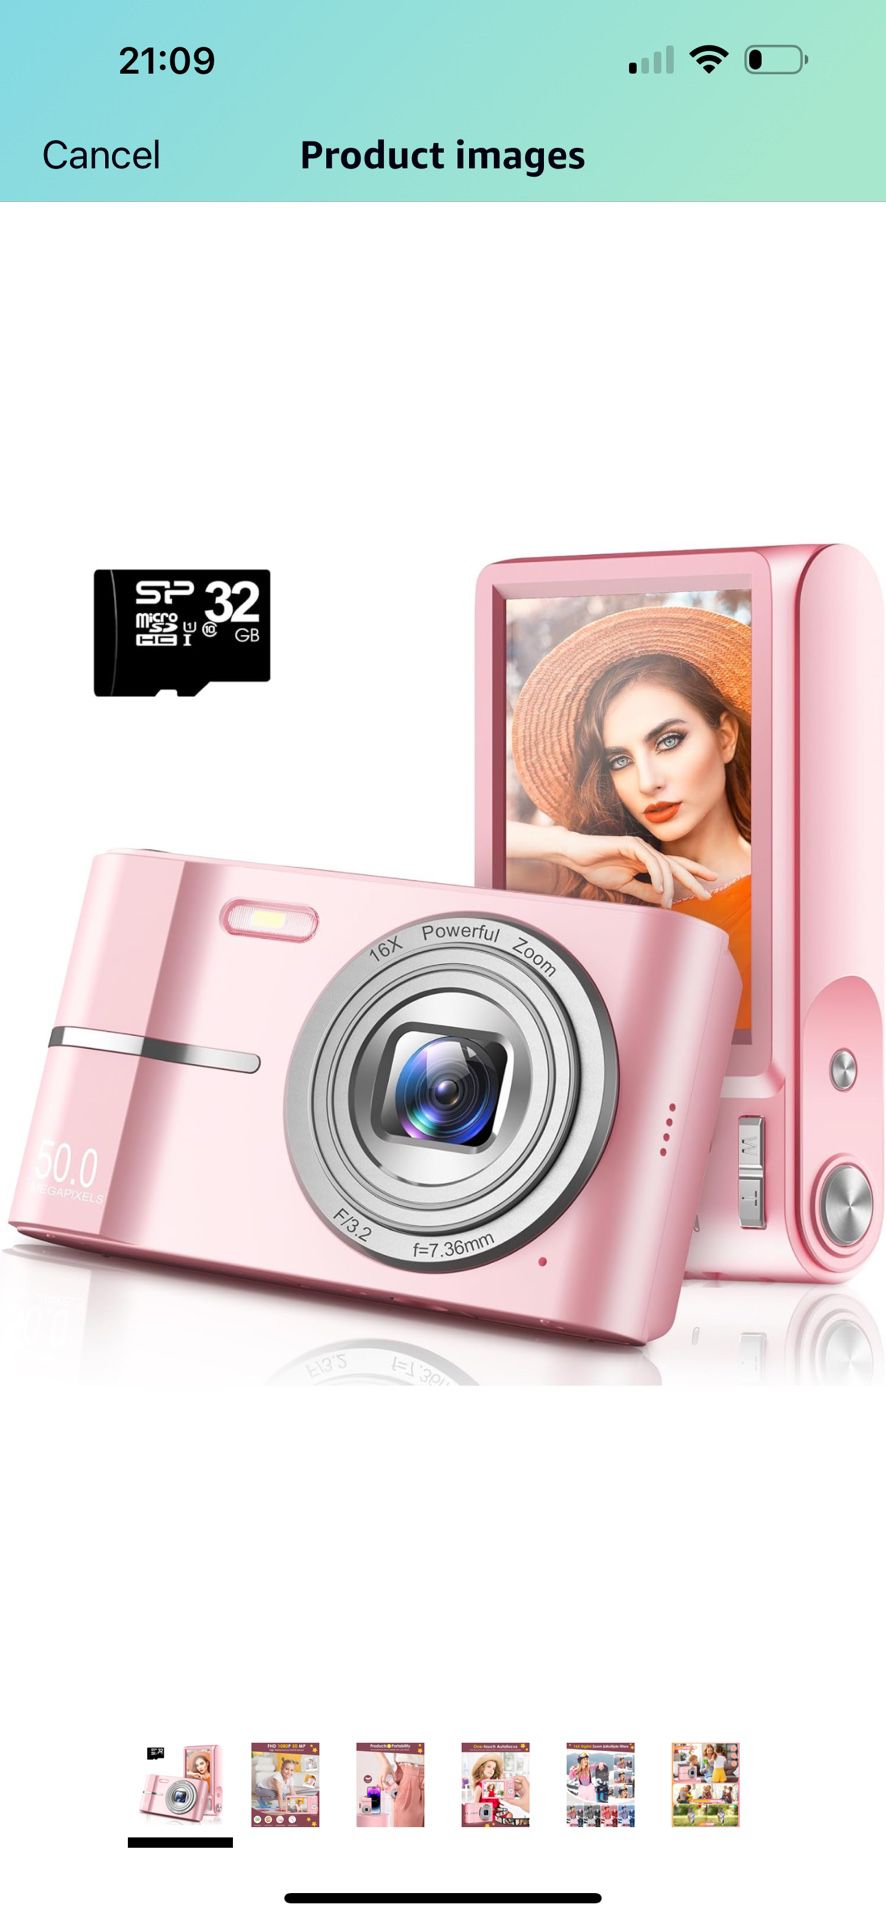 Brand New Digital Camera, 50MP Full High Definition 1080P Camera with 16x Zoom Anti Shake